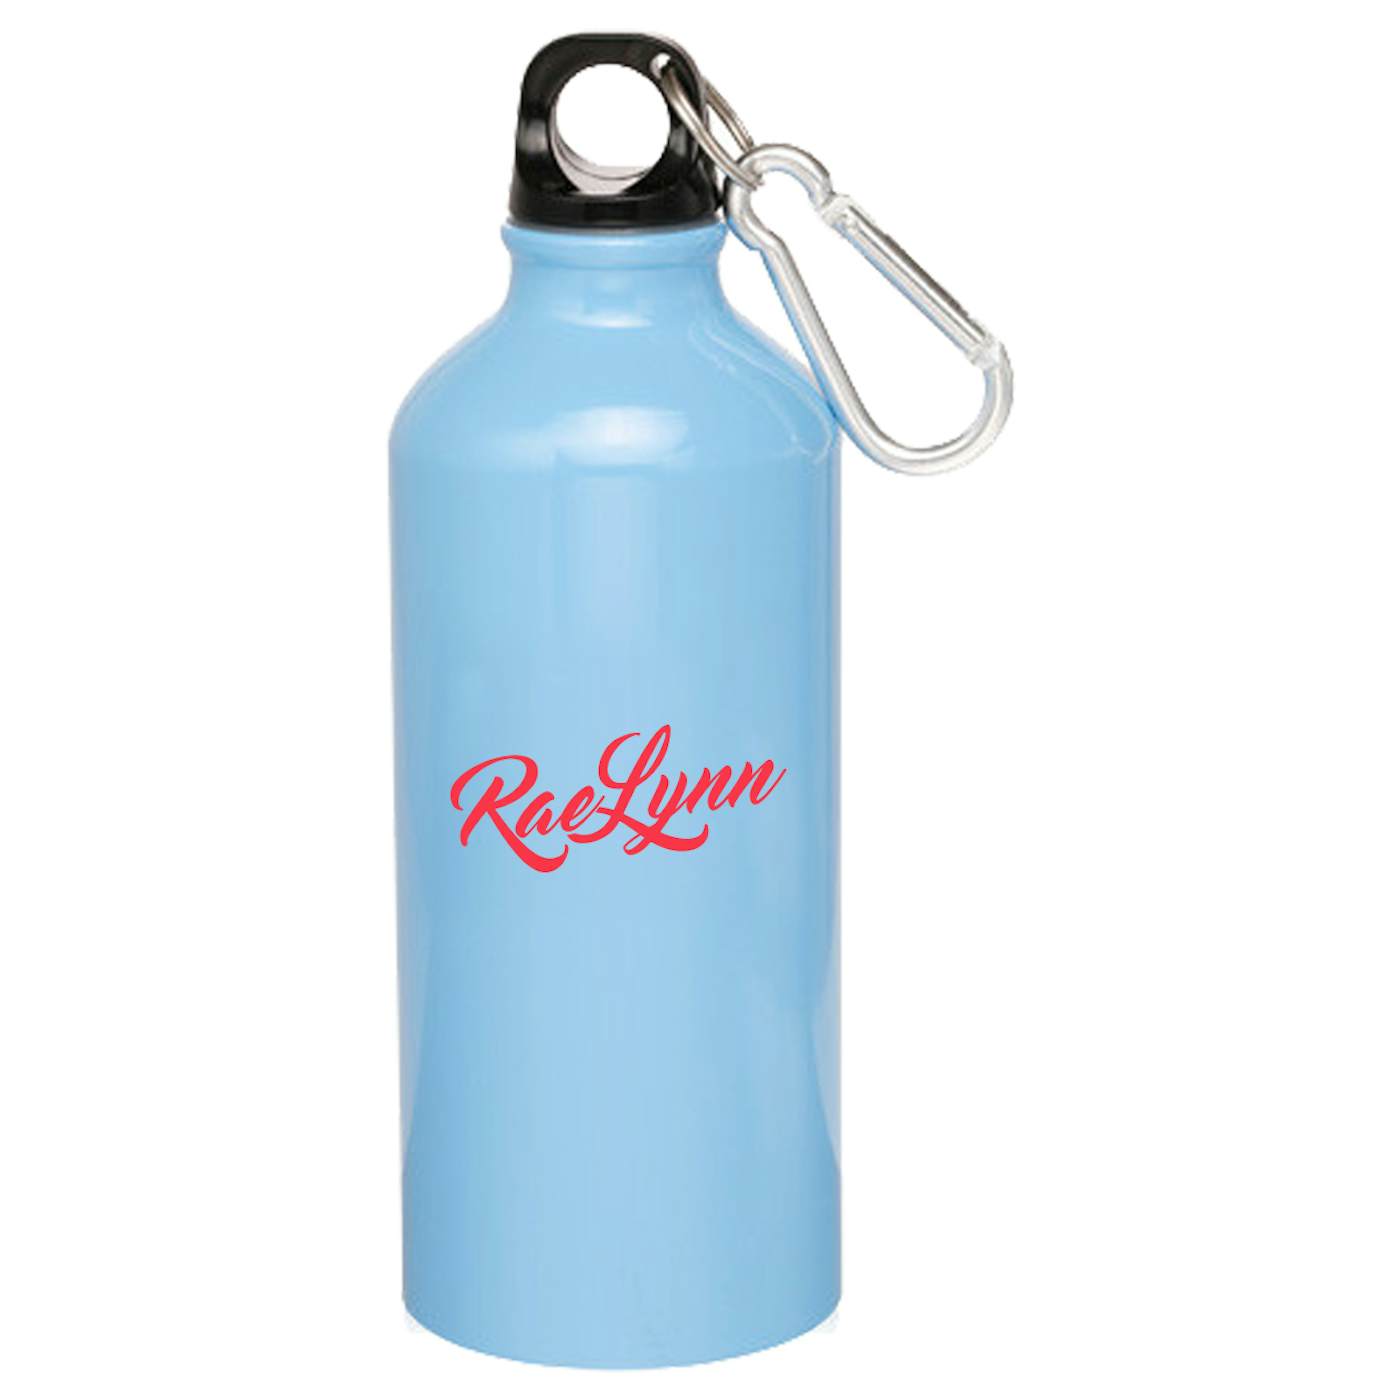 RaeLynn Water bottle